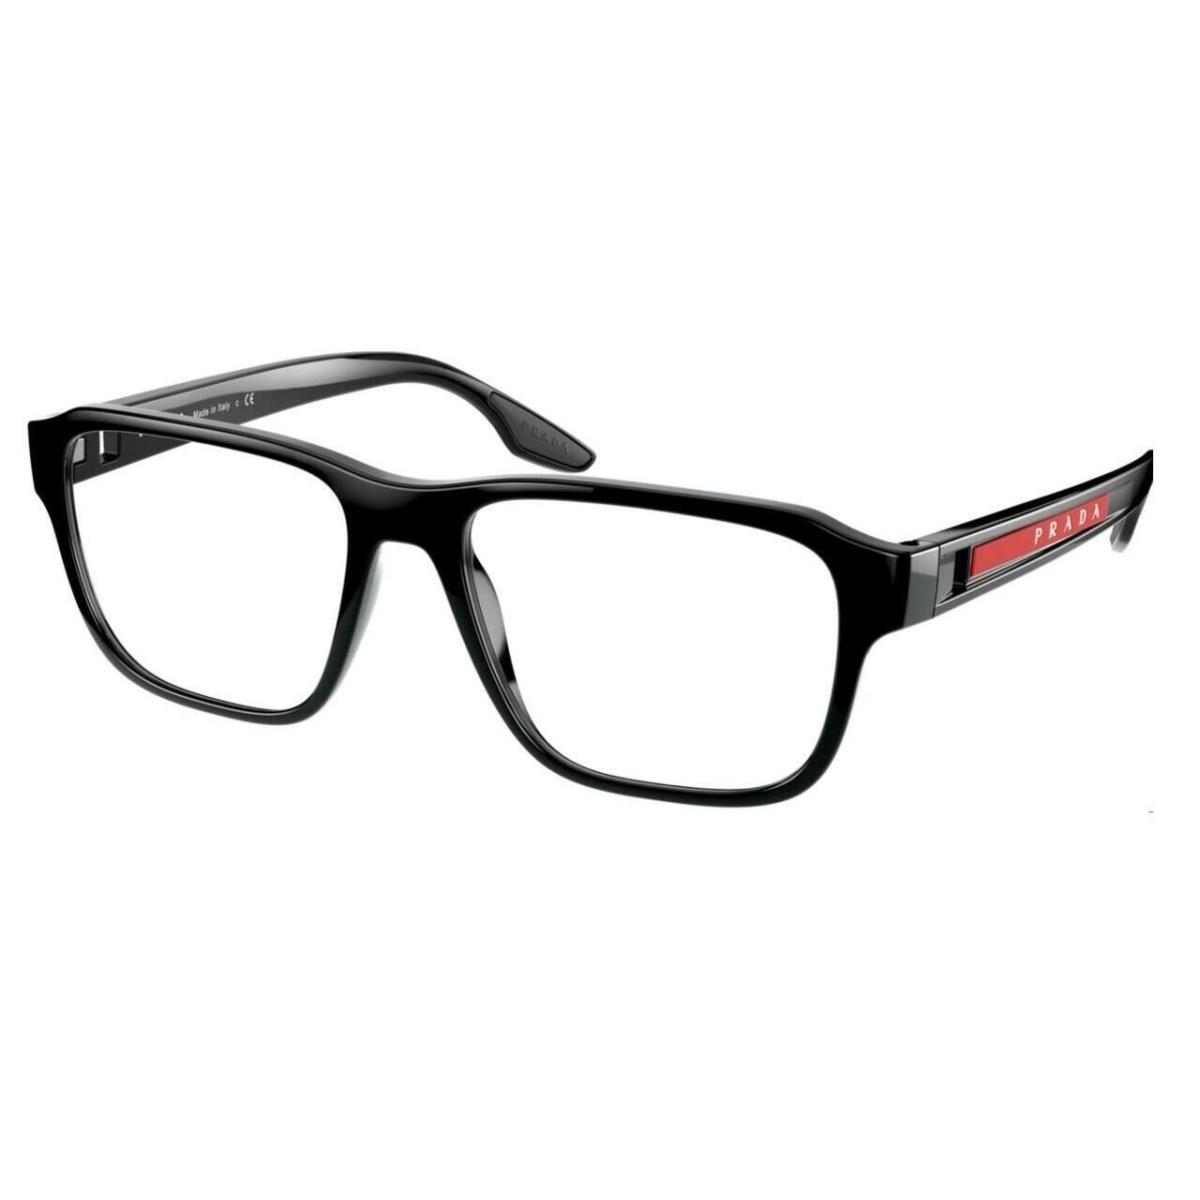 Prada Eyeglasses VPS04N 1AB-1O1 Black Full Rim Frames 54MM Rx-able - Black Frame